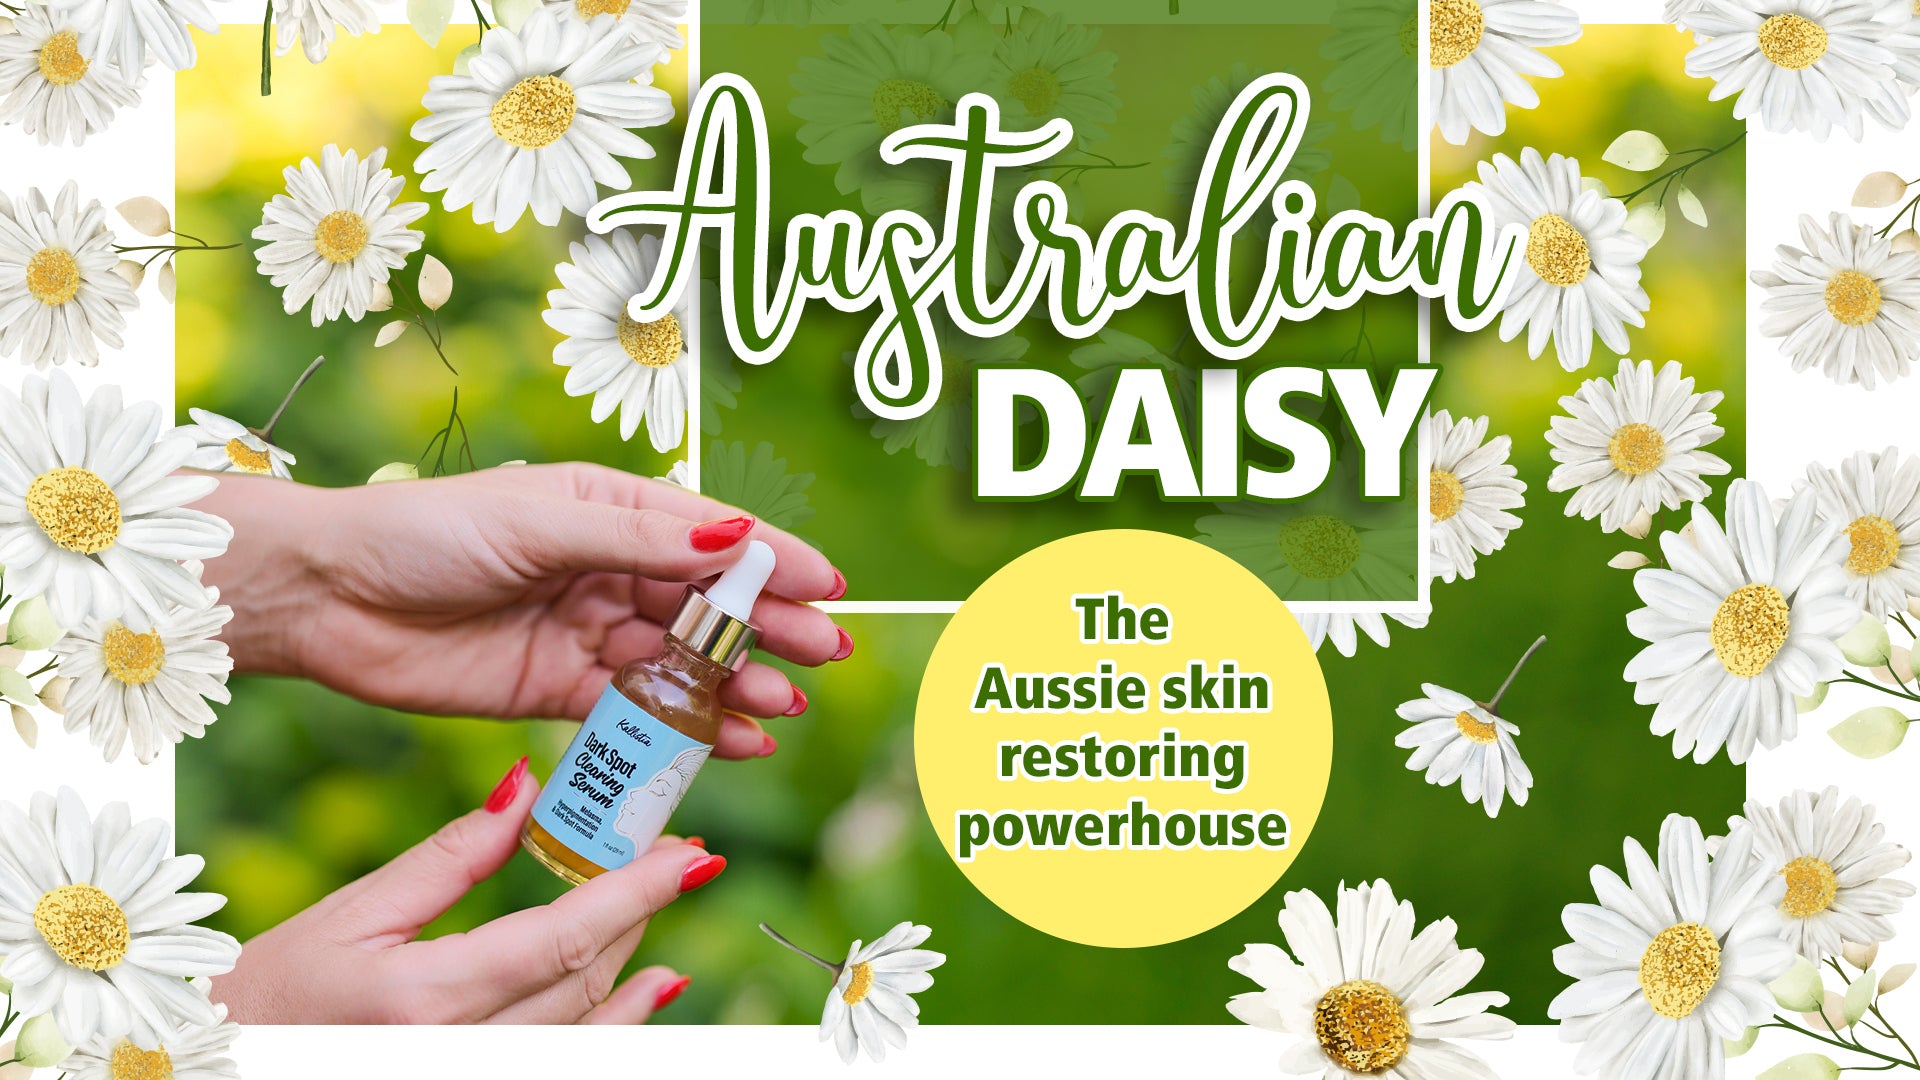 Australian Daisy, The Aussie skin restoring powerhouse